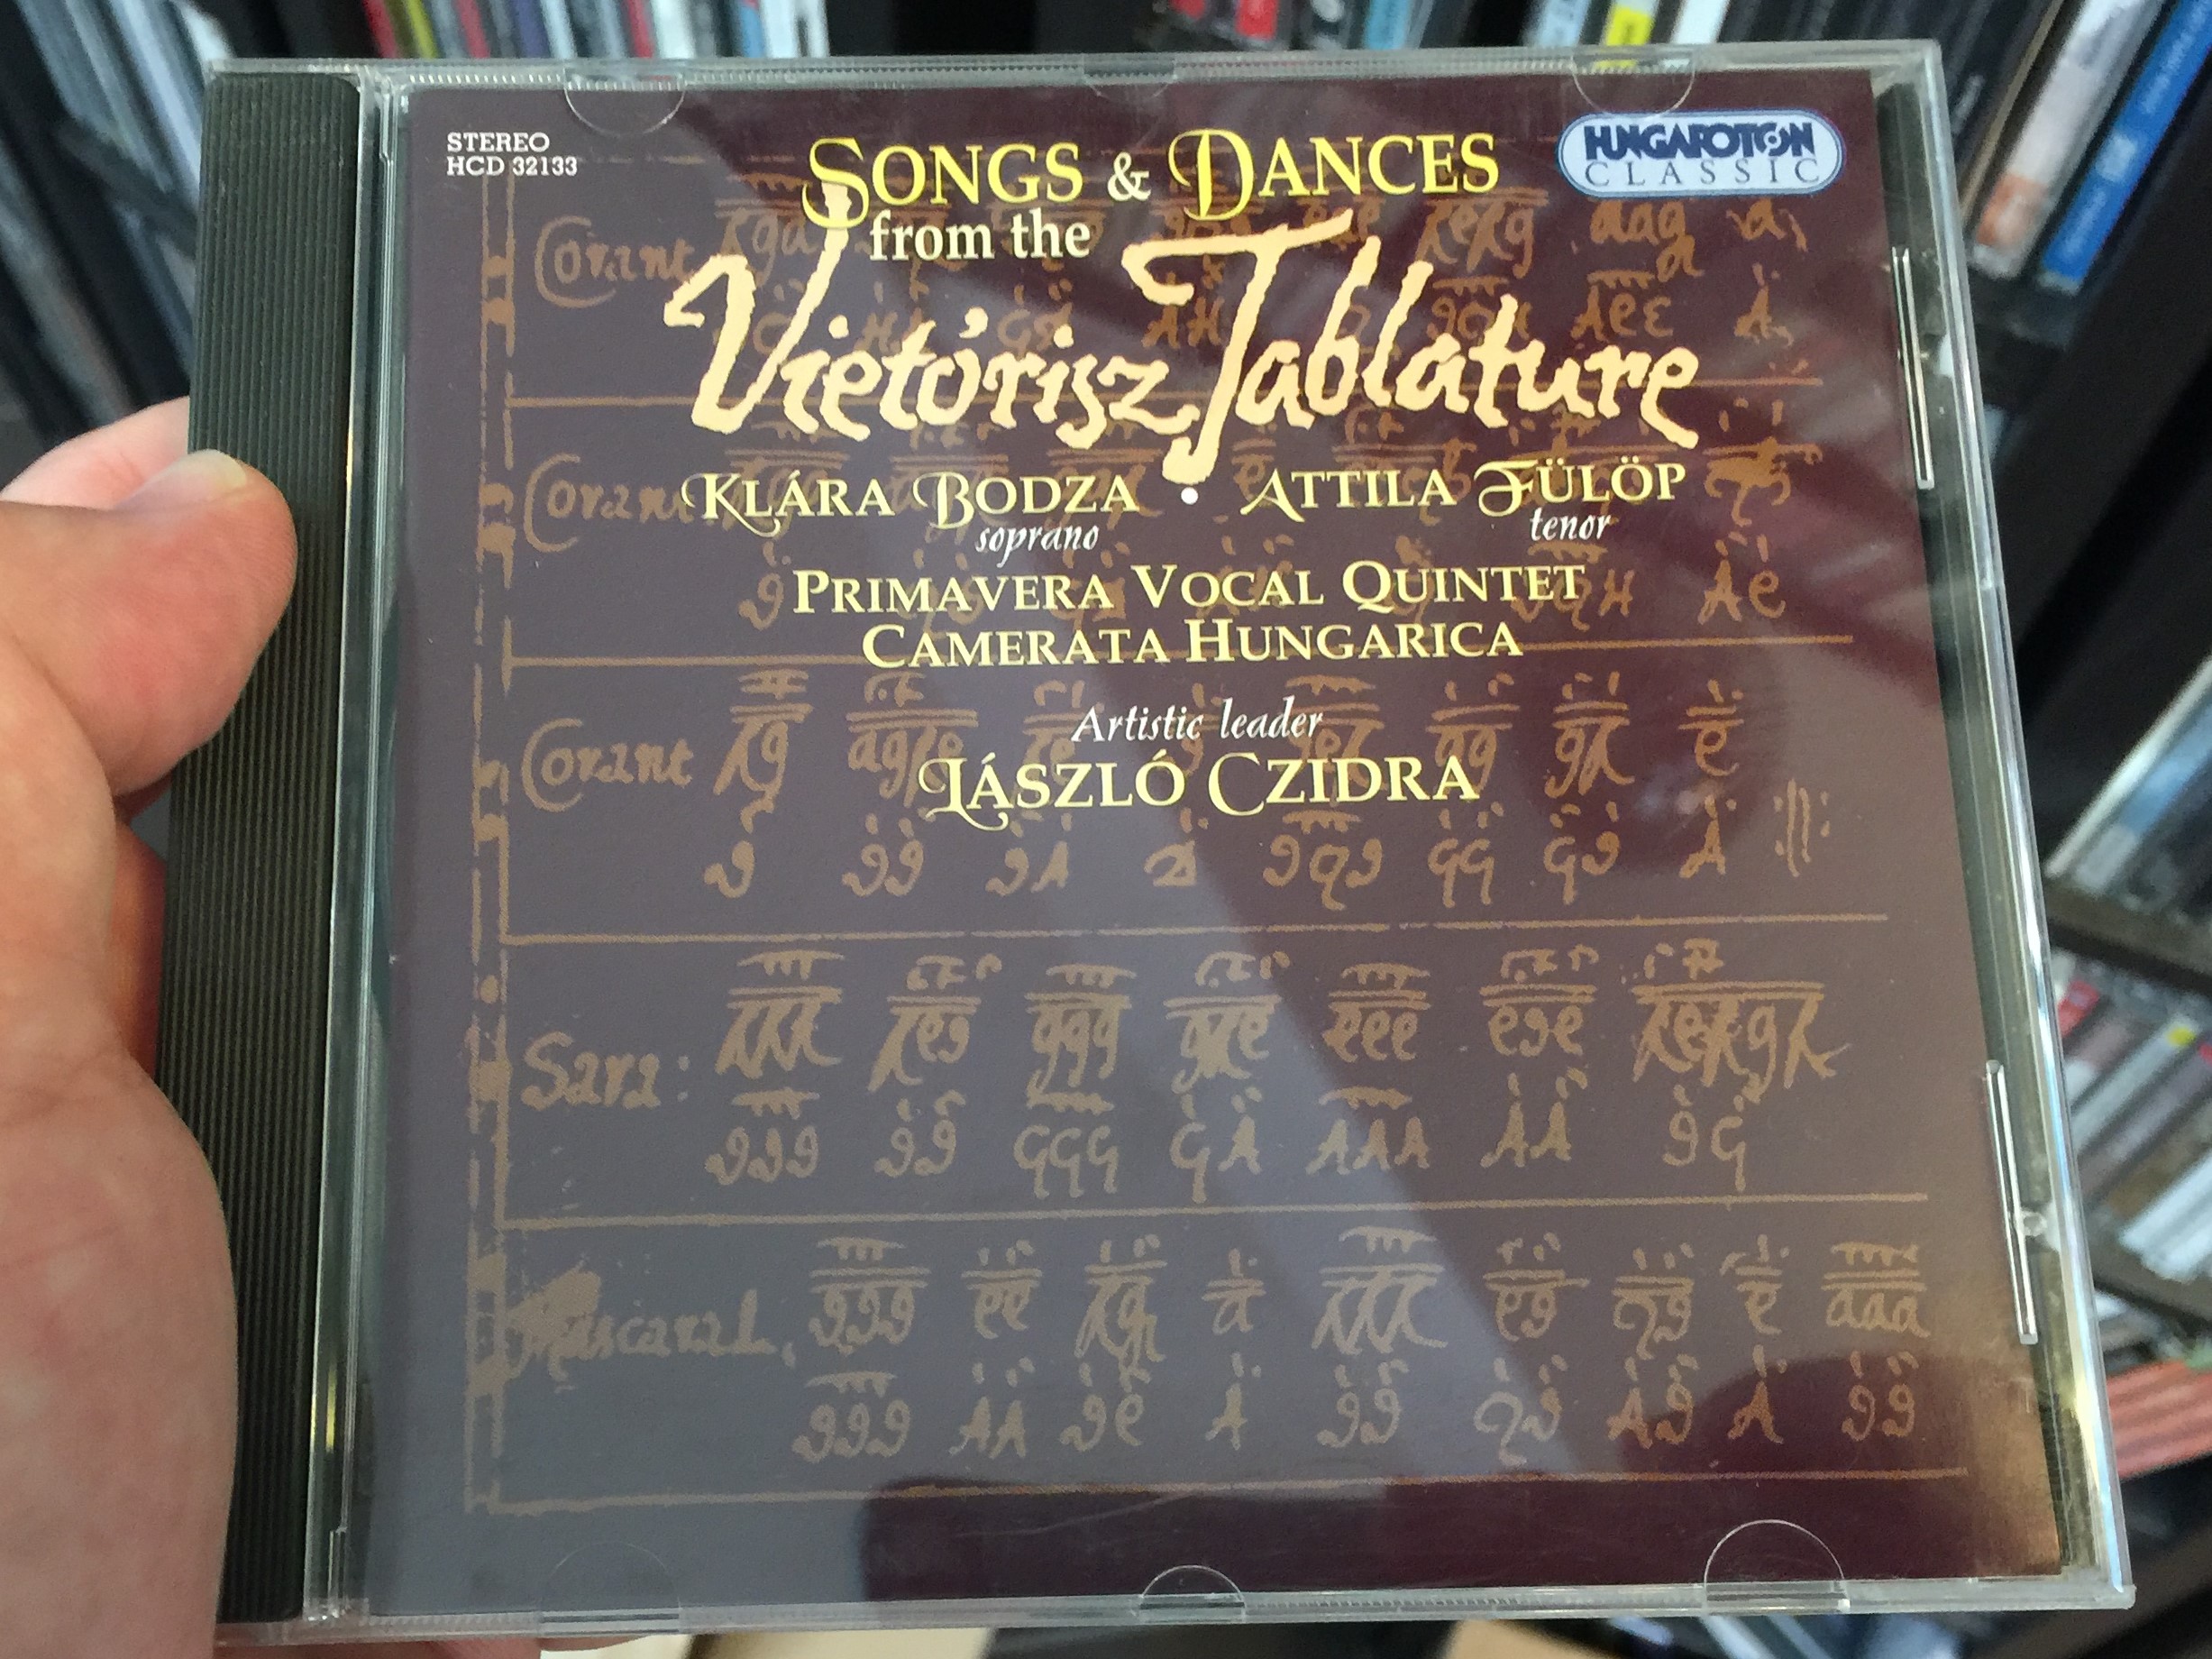 songs-dances-from-the-viet-risz-tablature-klara-bodza-soprano-attila-fulop-tenor-primavera-vocal-quintet-camerata-hungarica-artistic-leader-laszlo-czidra-hungaroton-classic-audio-cd-1-.jpg